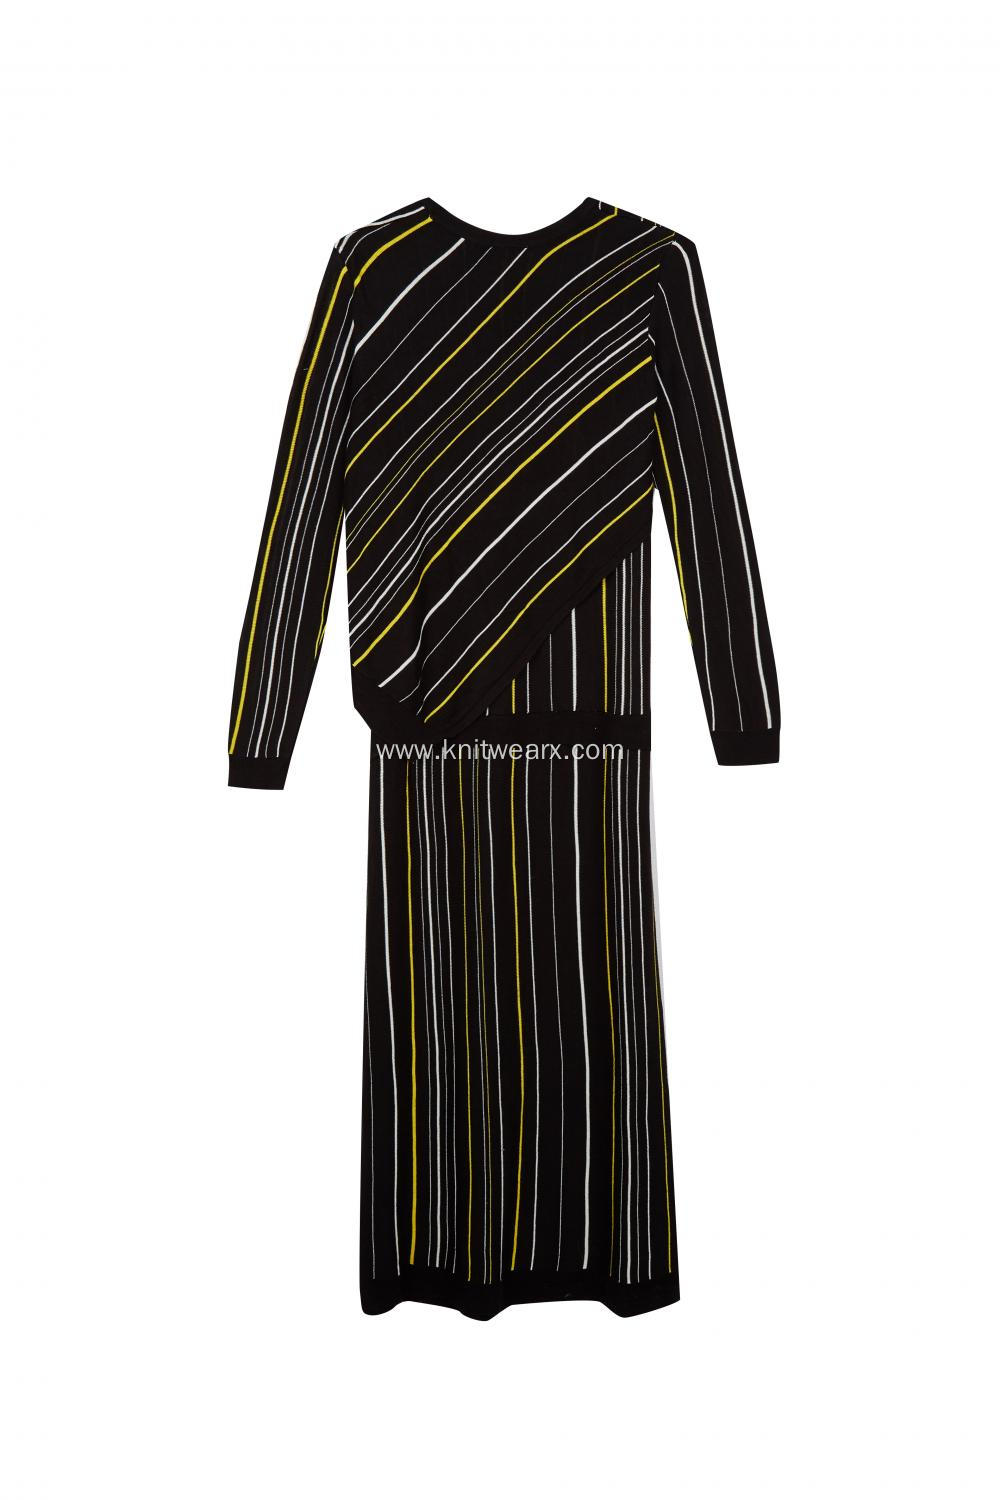 Women's Knitted Colourful Diagonal Stripe Long Dress